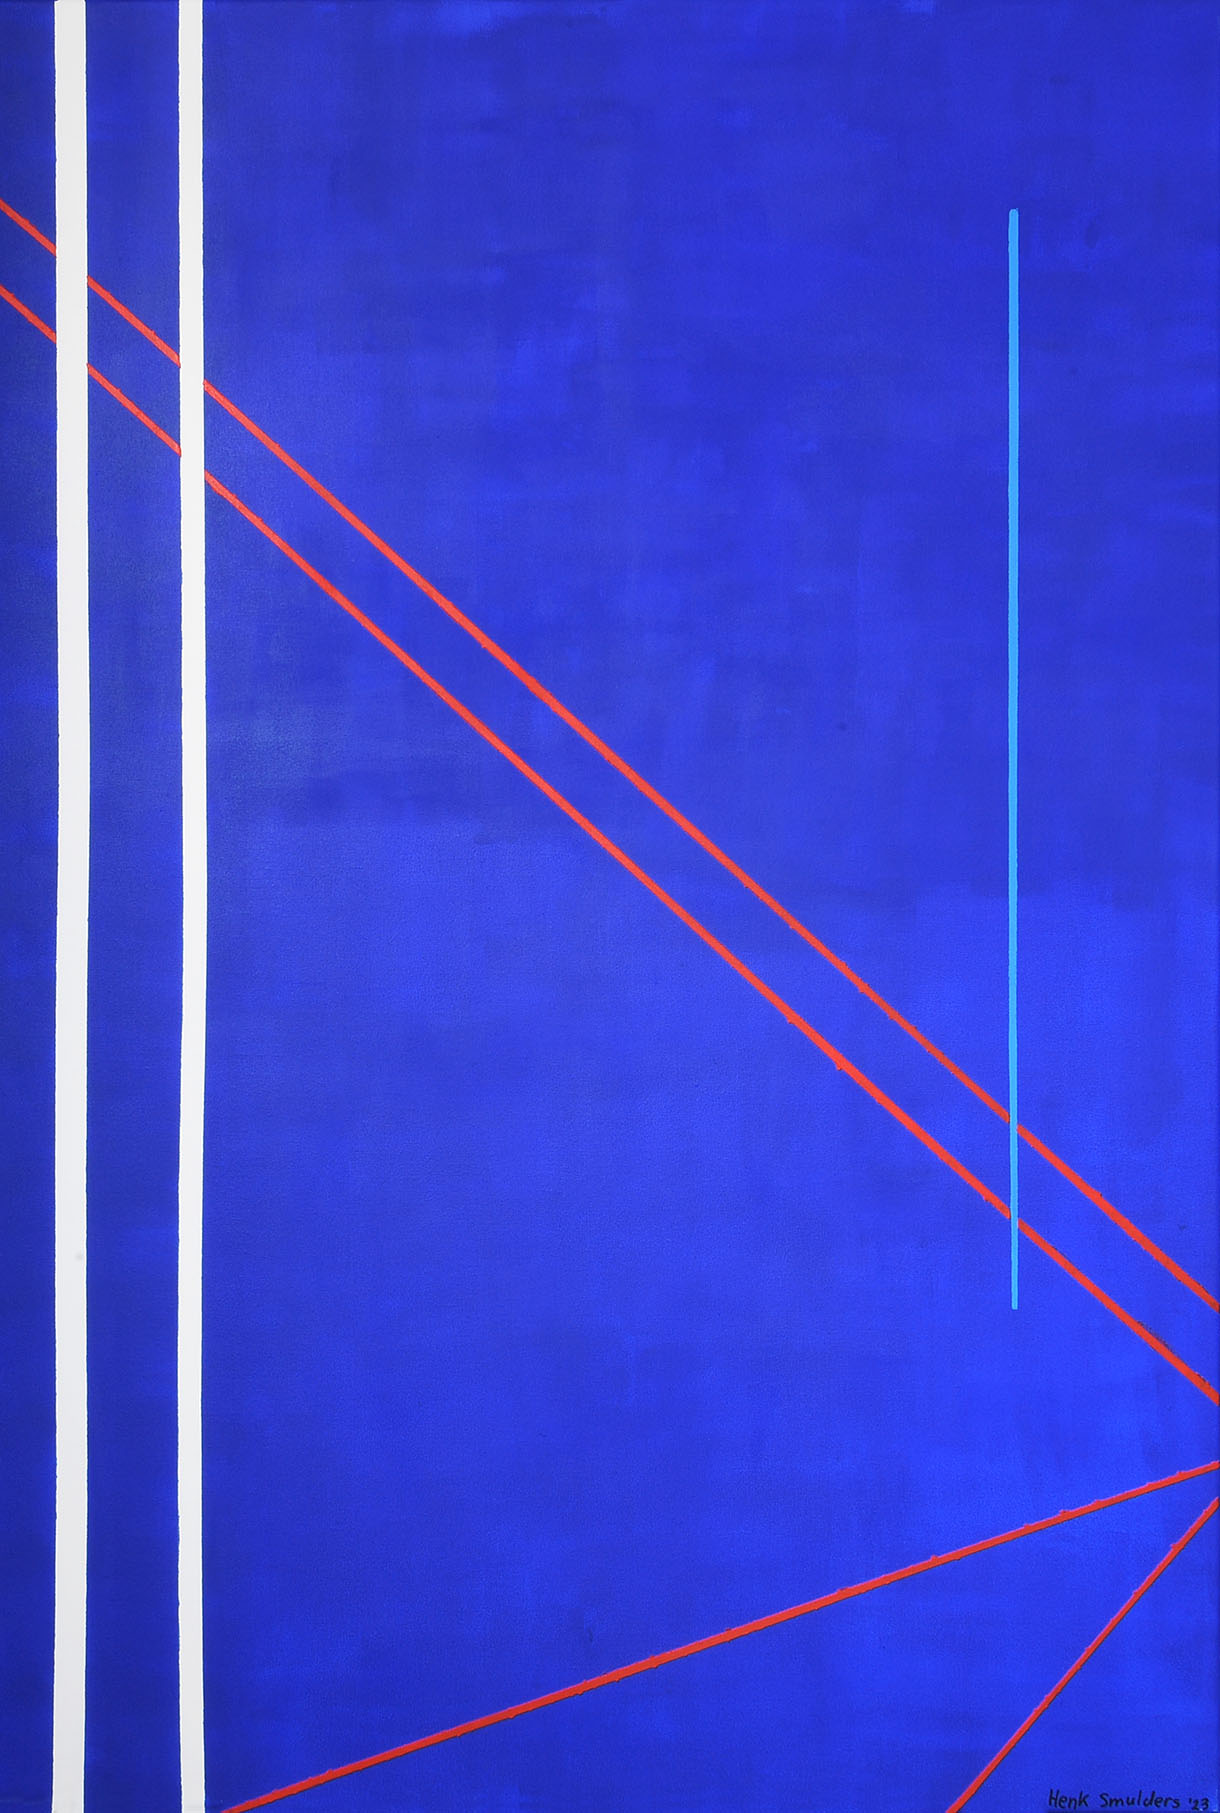 HENK SMULDERS // BLUE RED LINE